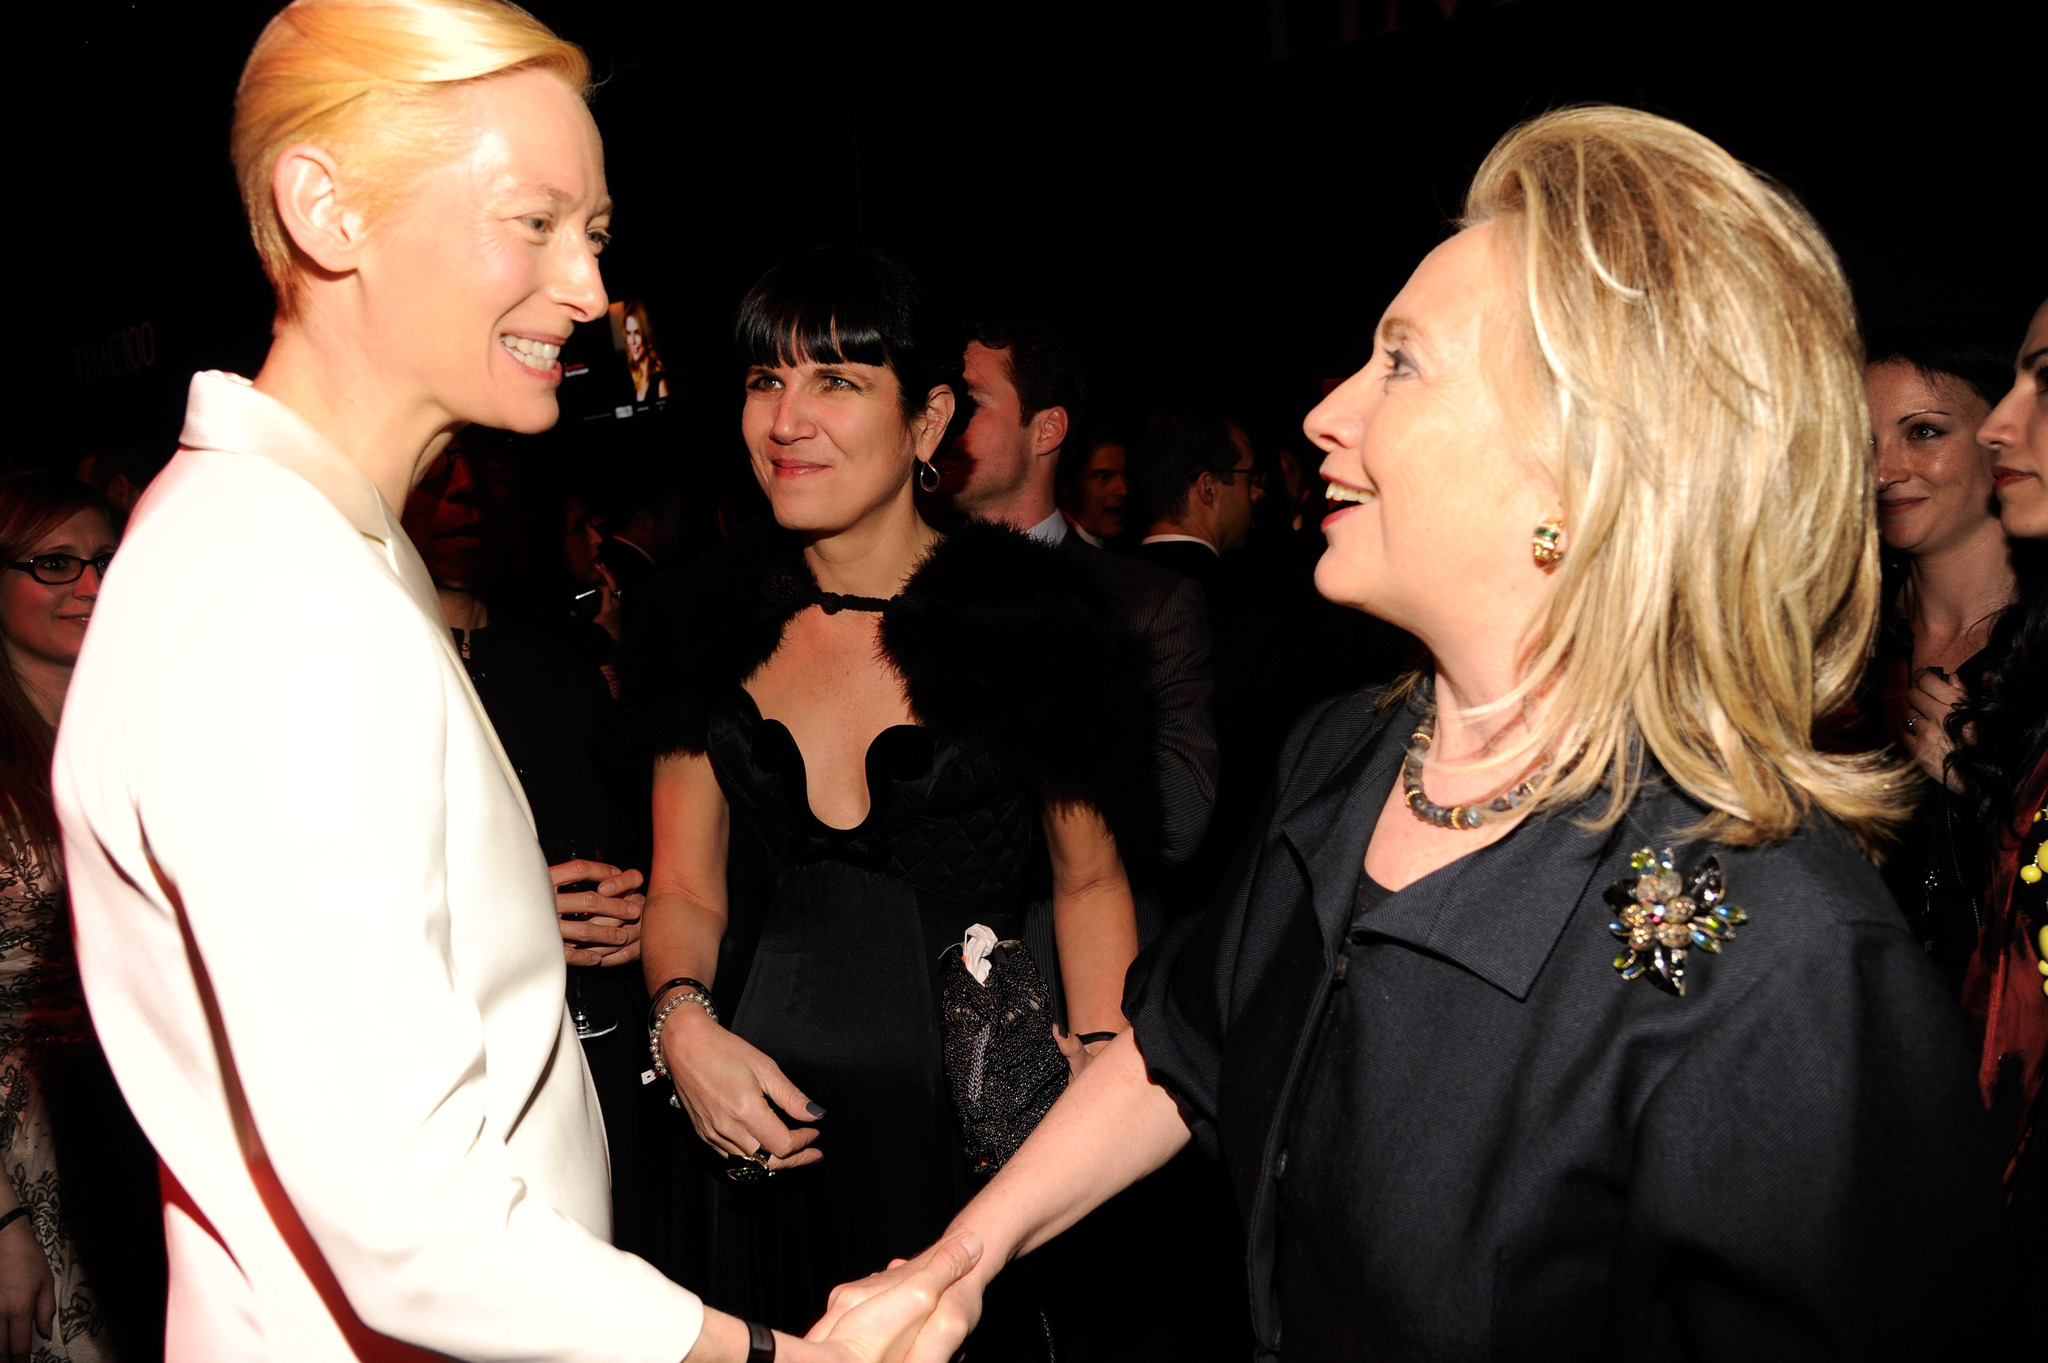 Hillary Clinton and Tilda Swinton